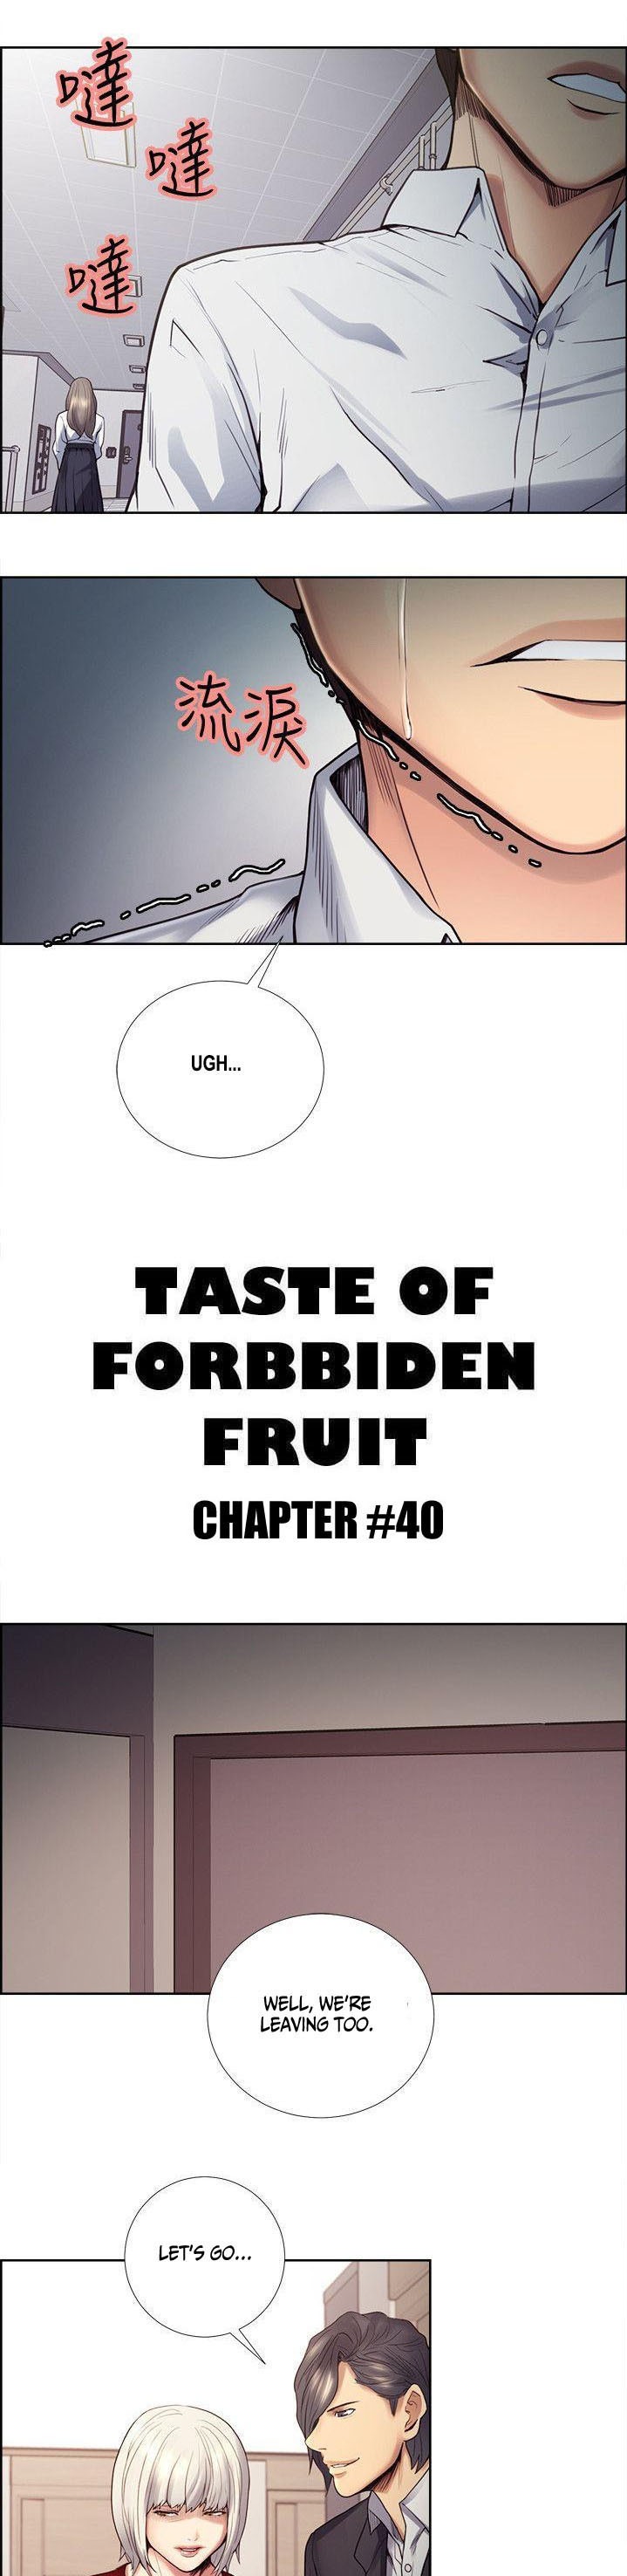 Taste of Forbbiden Fruit - Chapter 40 Page 1